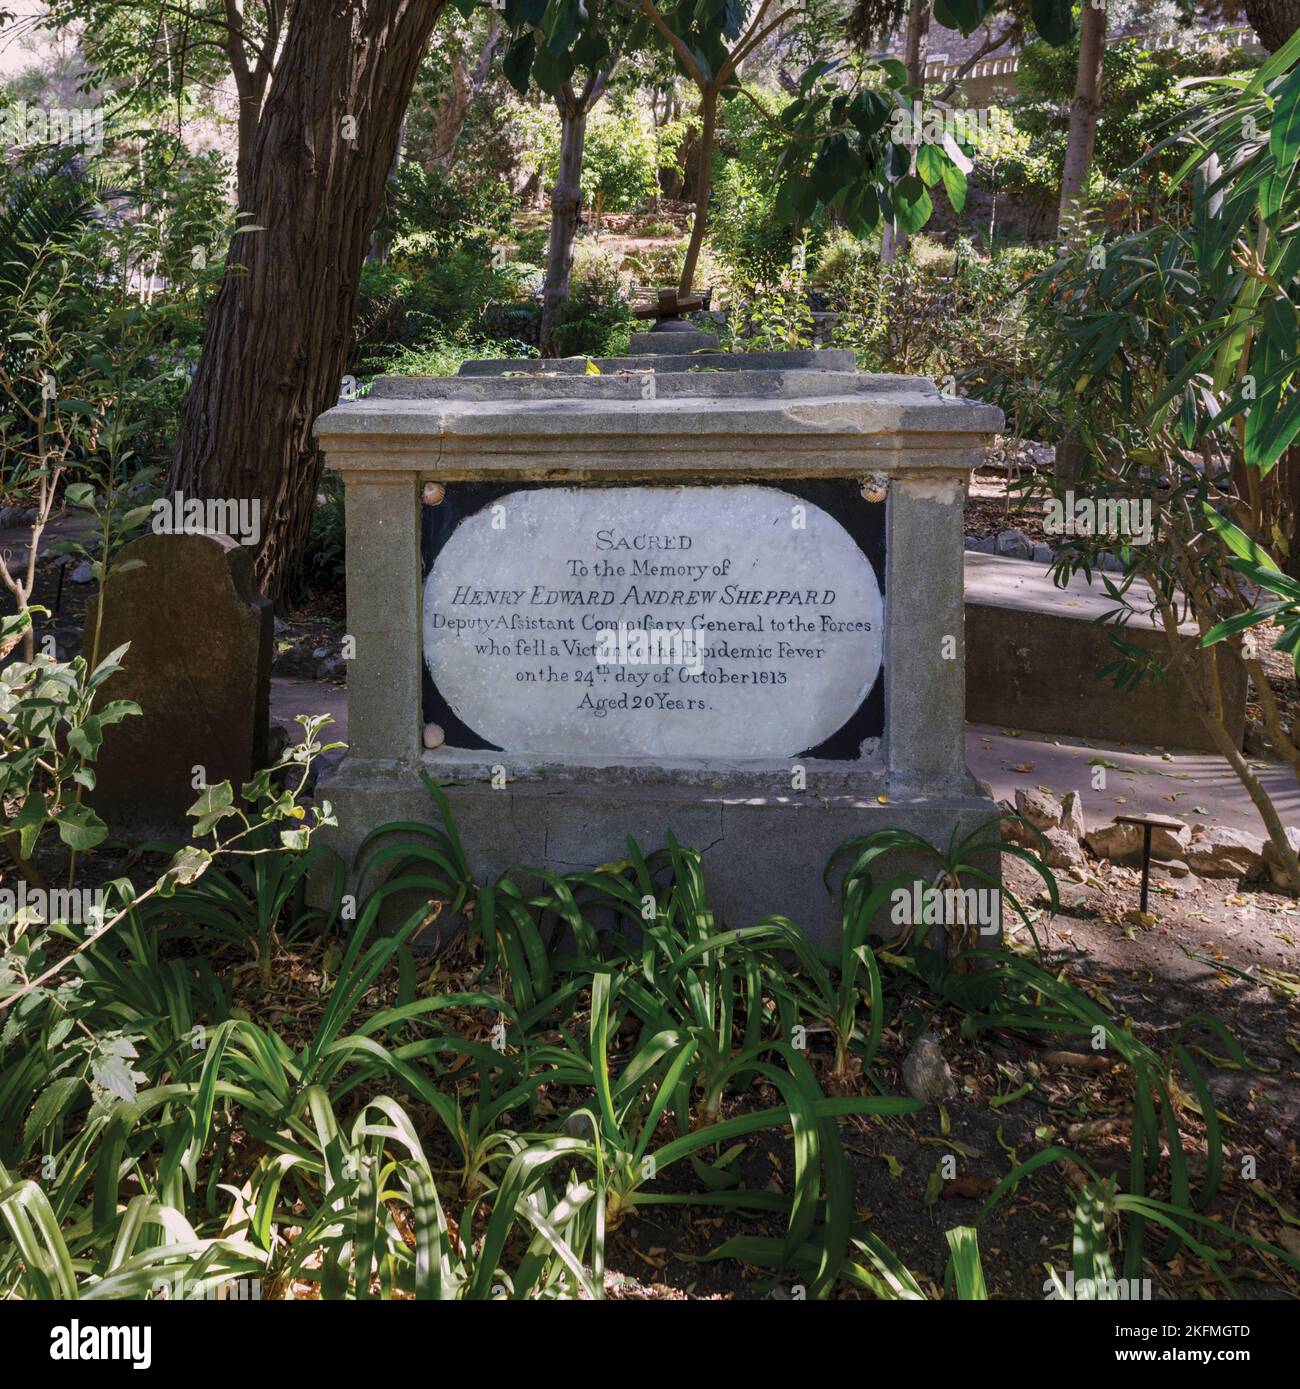 Cementerio Trafalgar, Gibraltar. La tumba de Henry Edward Andrew Sheppard que murió de fiebre amarilla en 1813. Gibraltar sufrió brotes de fe amarilla Foto de stock